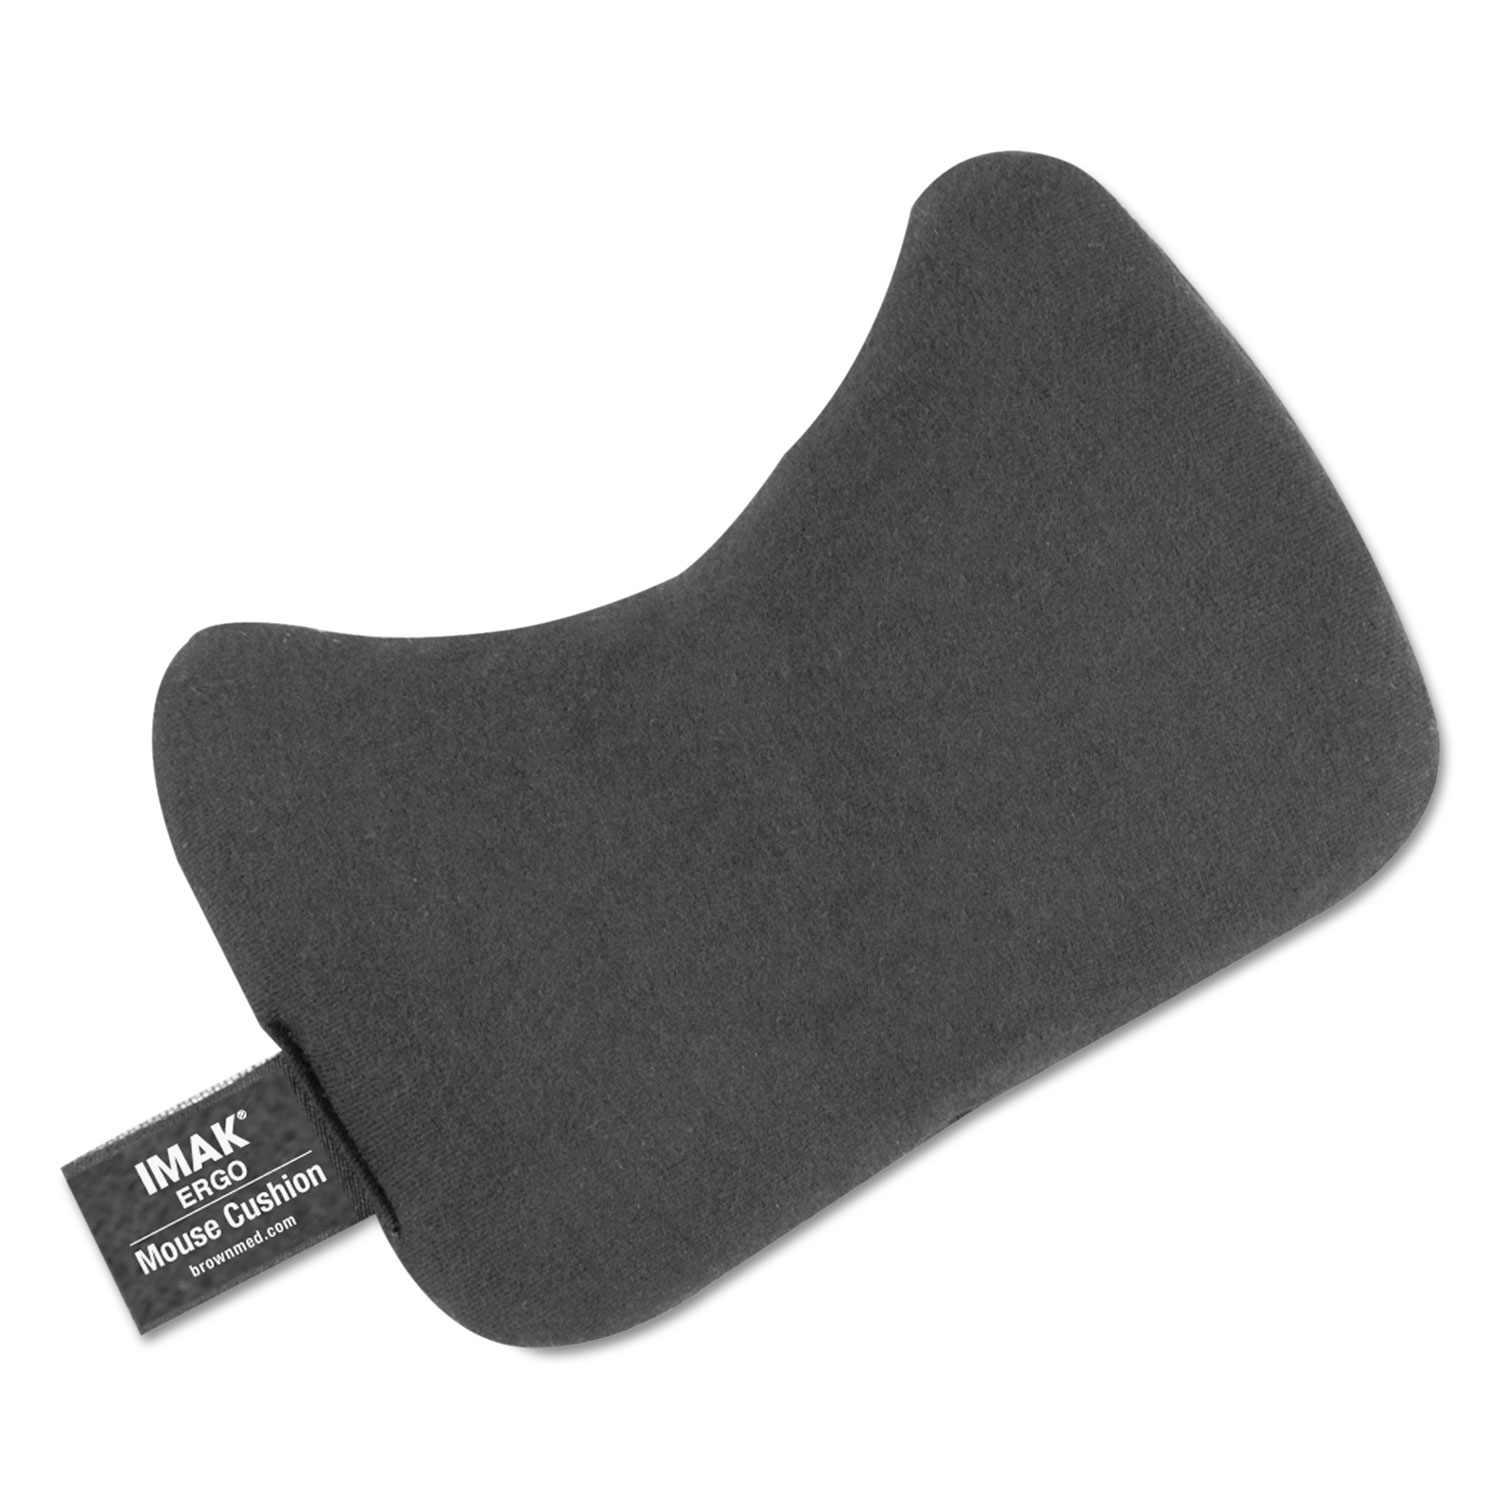  IMAK Ergo A10165 Mouse Wrist Cushion, Black (IMAA10165) 